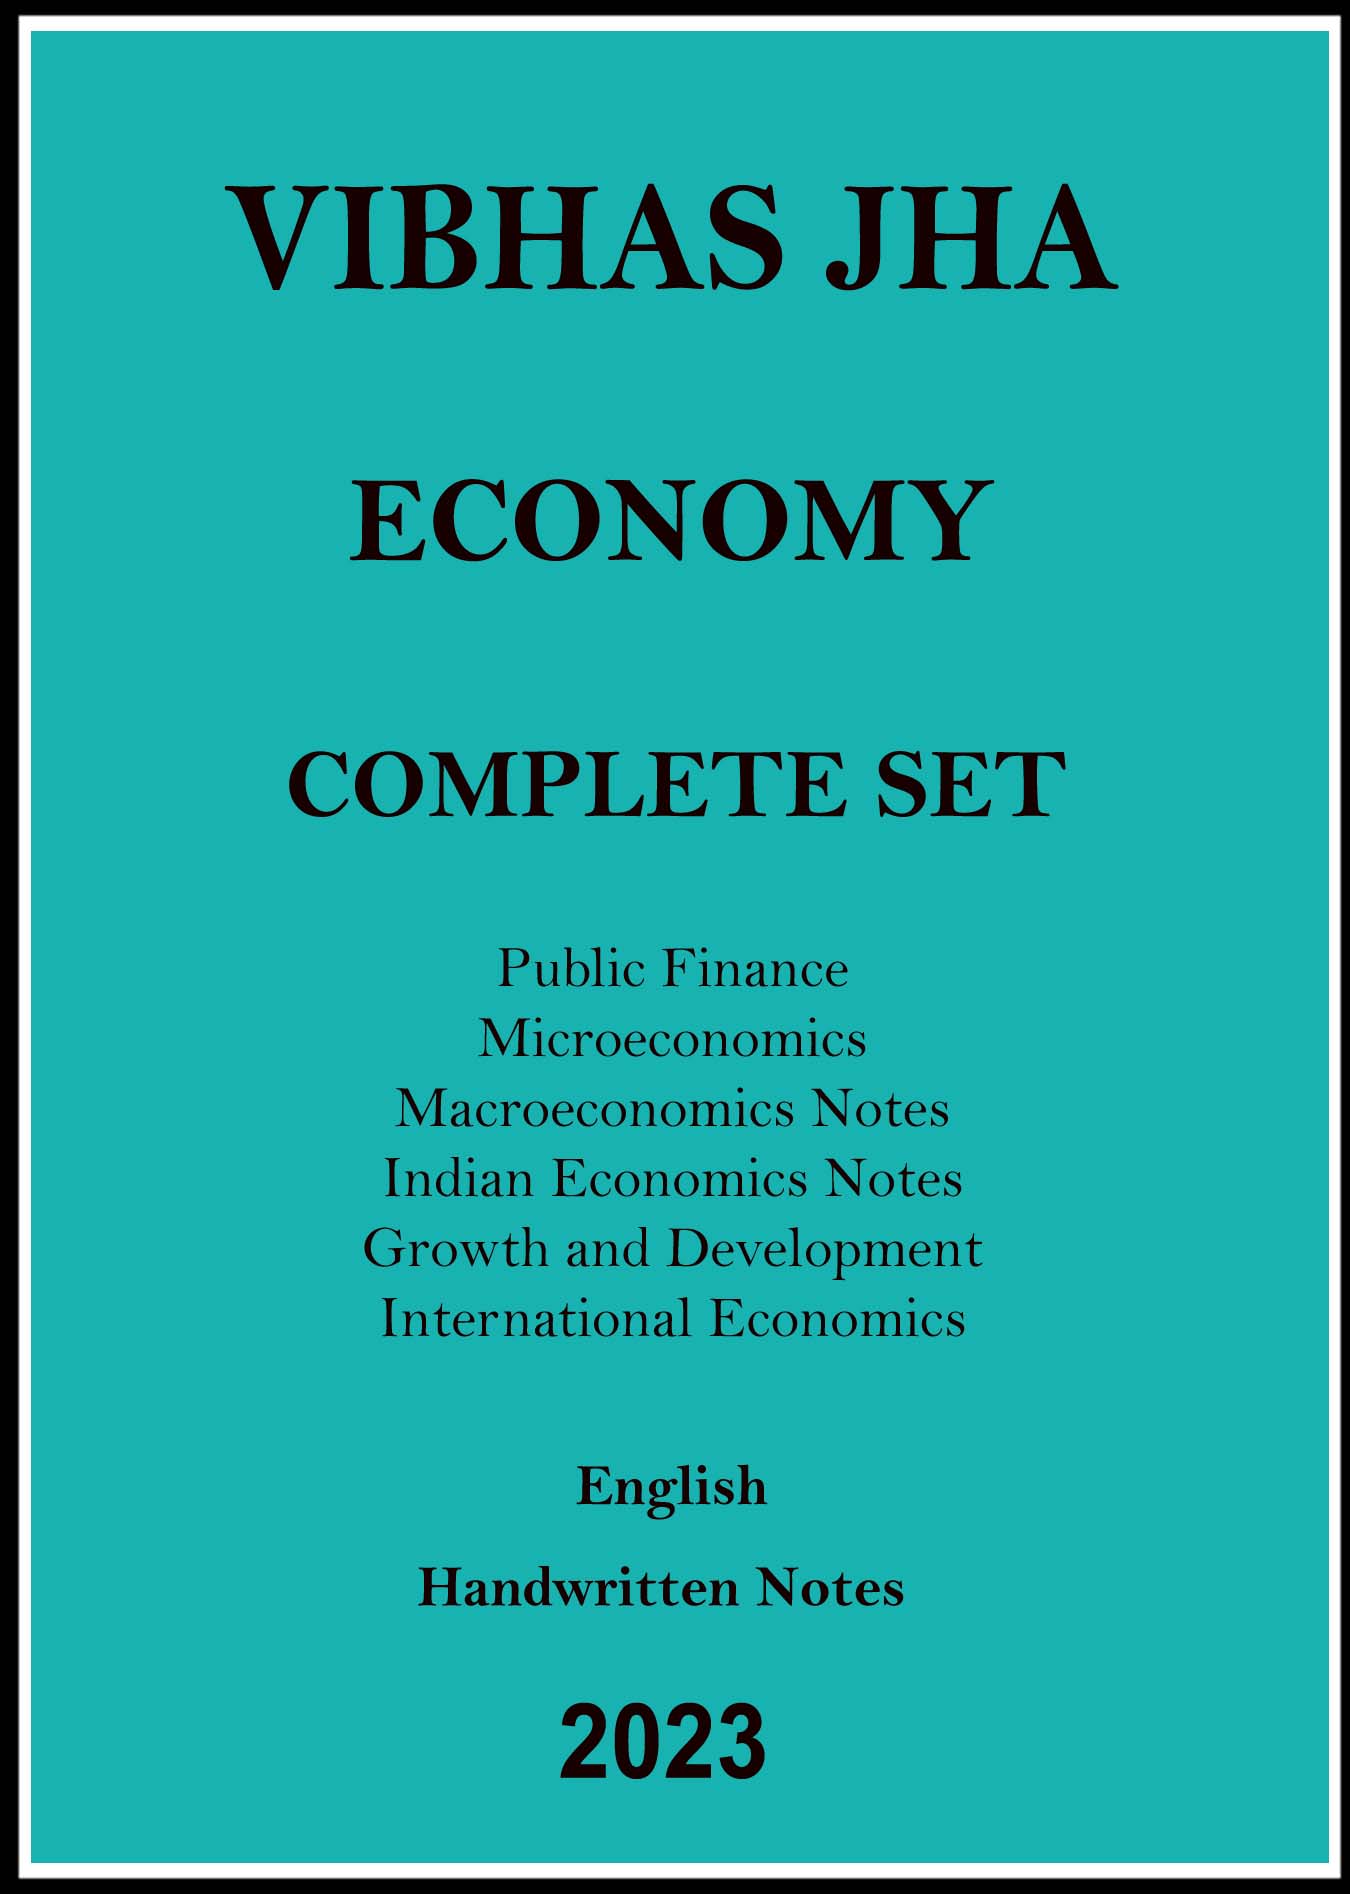 vibhas-jha-economics-handwritten-notes-english-2023